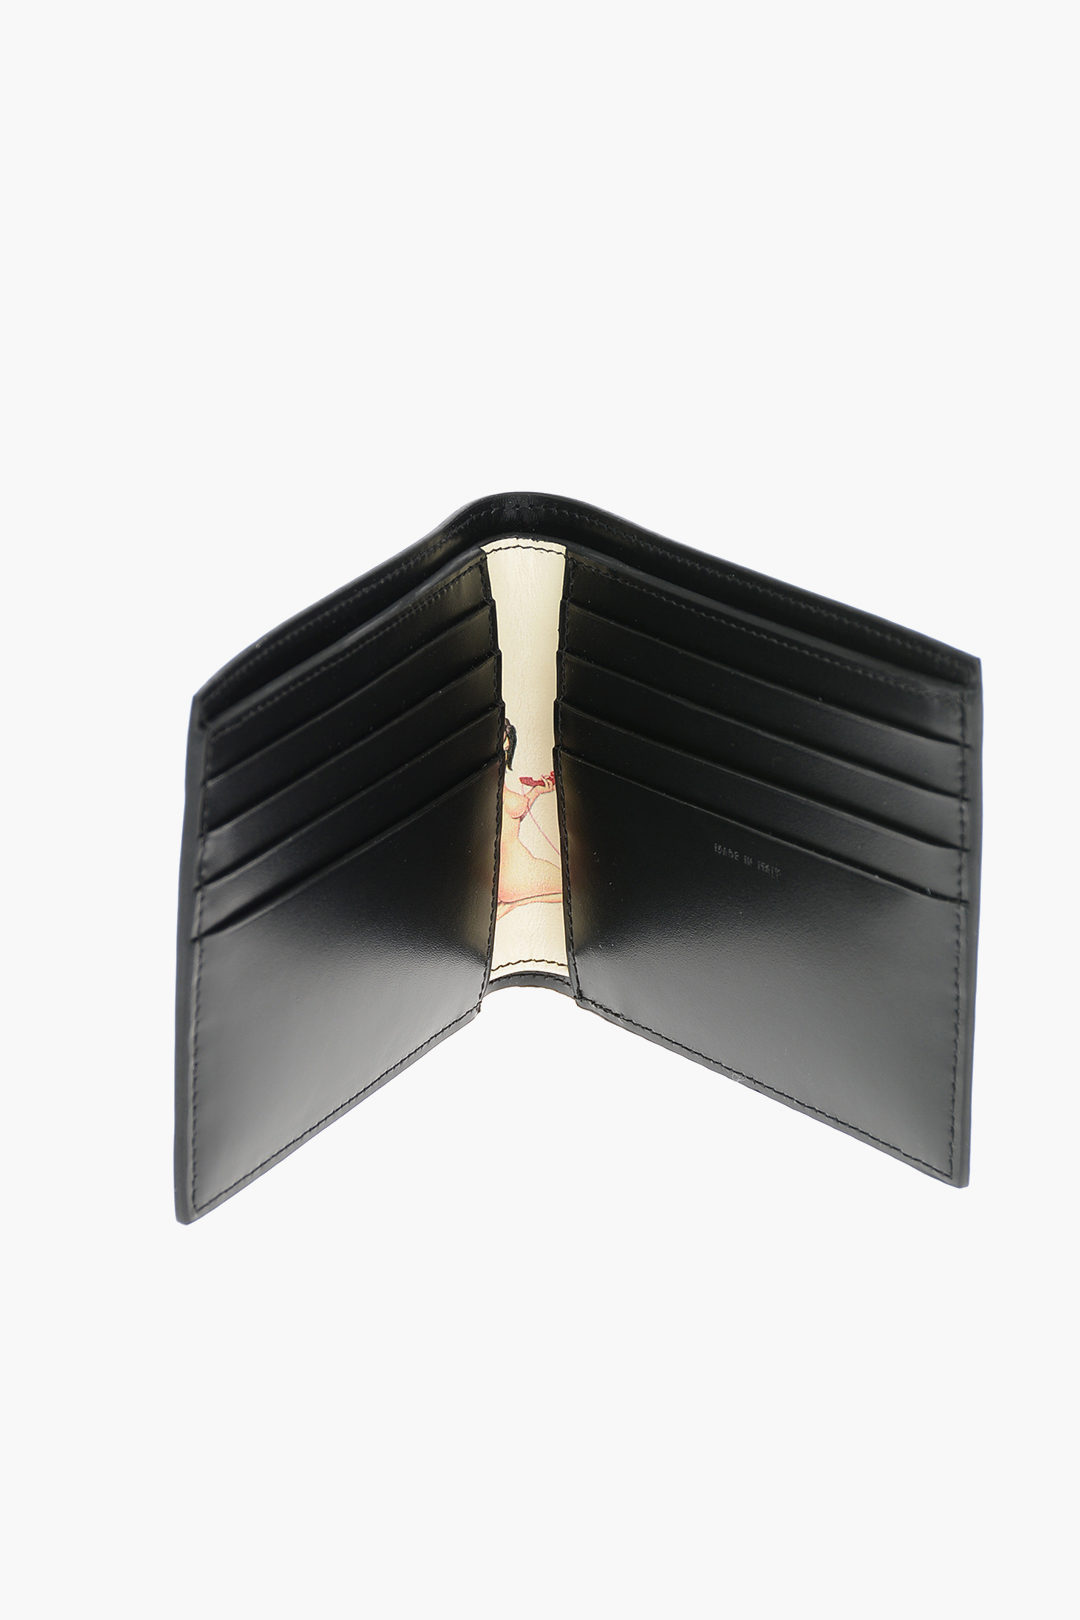 Dolce & Gabbana Large Keys Printed Bifold Leather Wallet